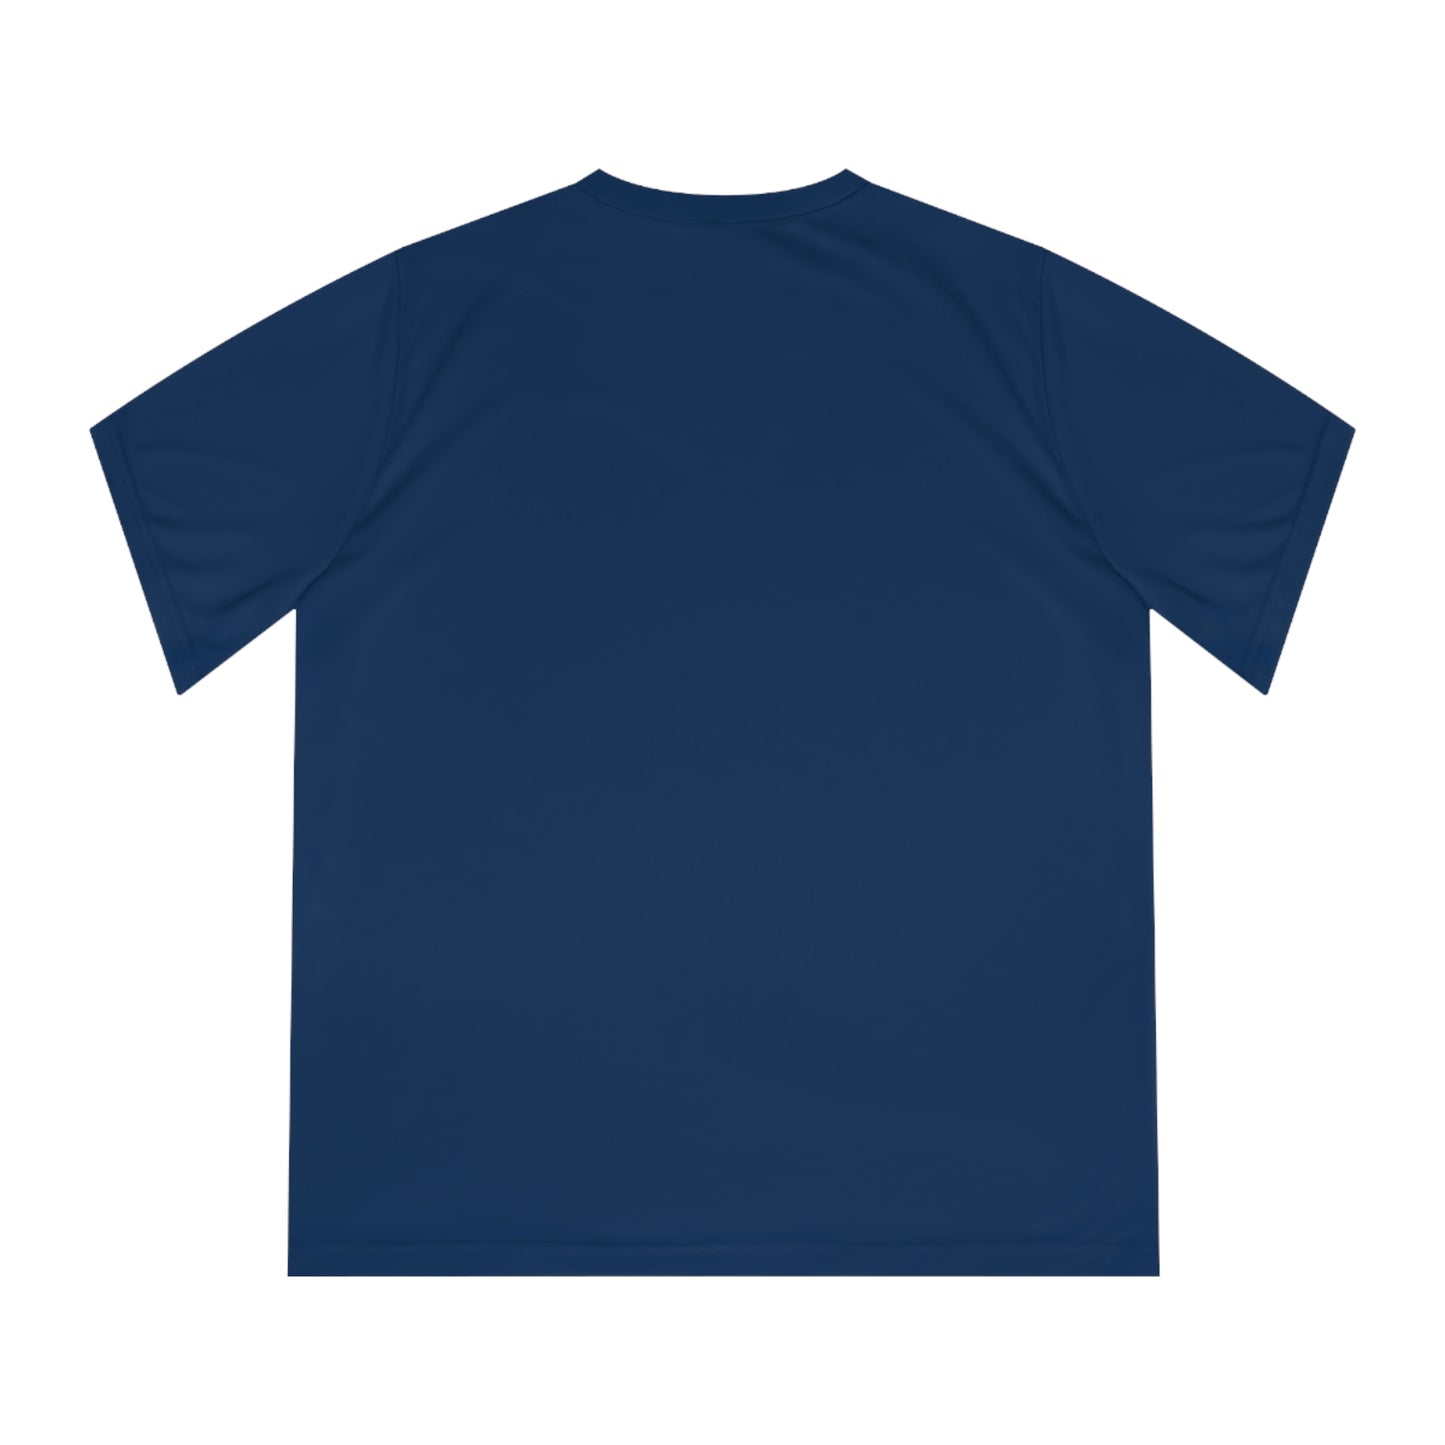 Baseball Cutout - Team 365 Women's Performance V-Neck T-Shirt